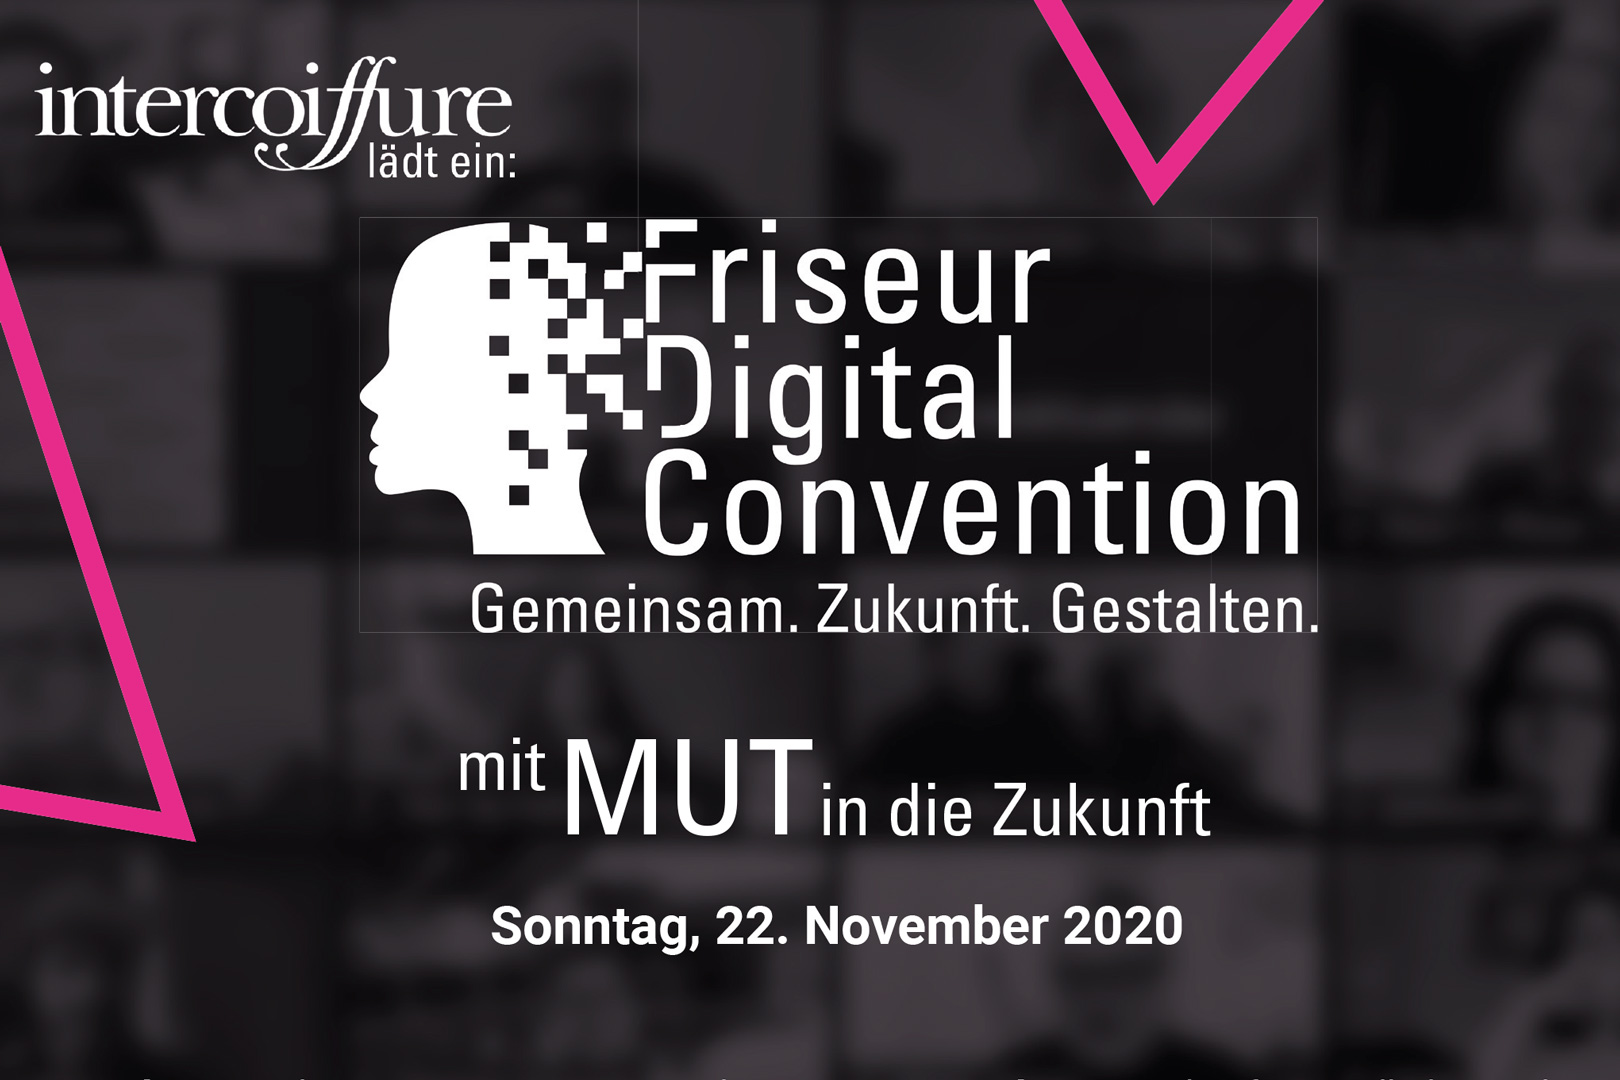 Dabei-sein-3-ICD-Friseur-Digital-Convention-am-22-November-2020-4090-1